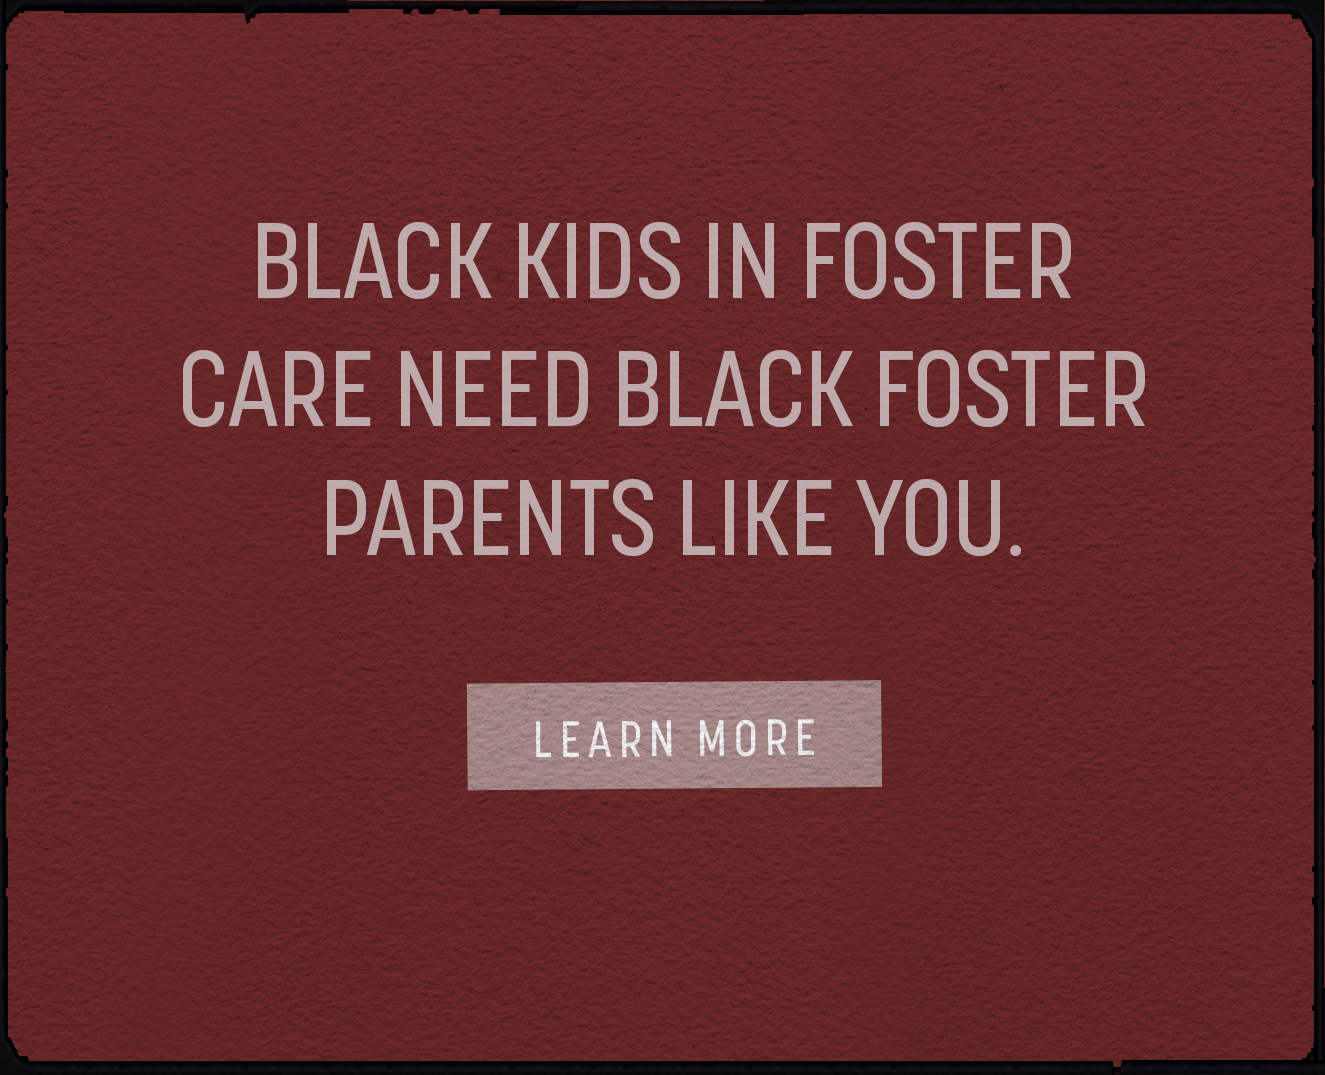 000865-001 Foster Parent Campaign_Generations_webslider mobile_P2